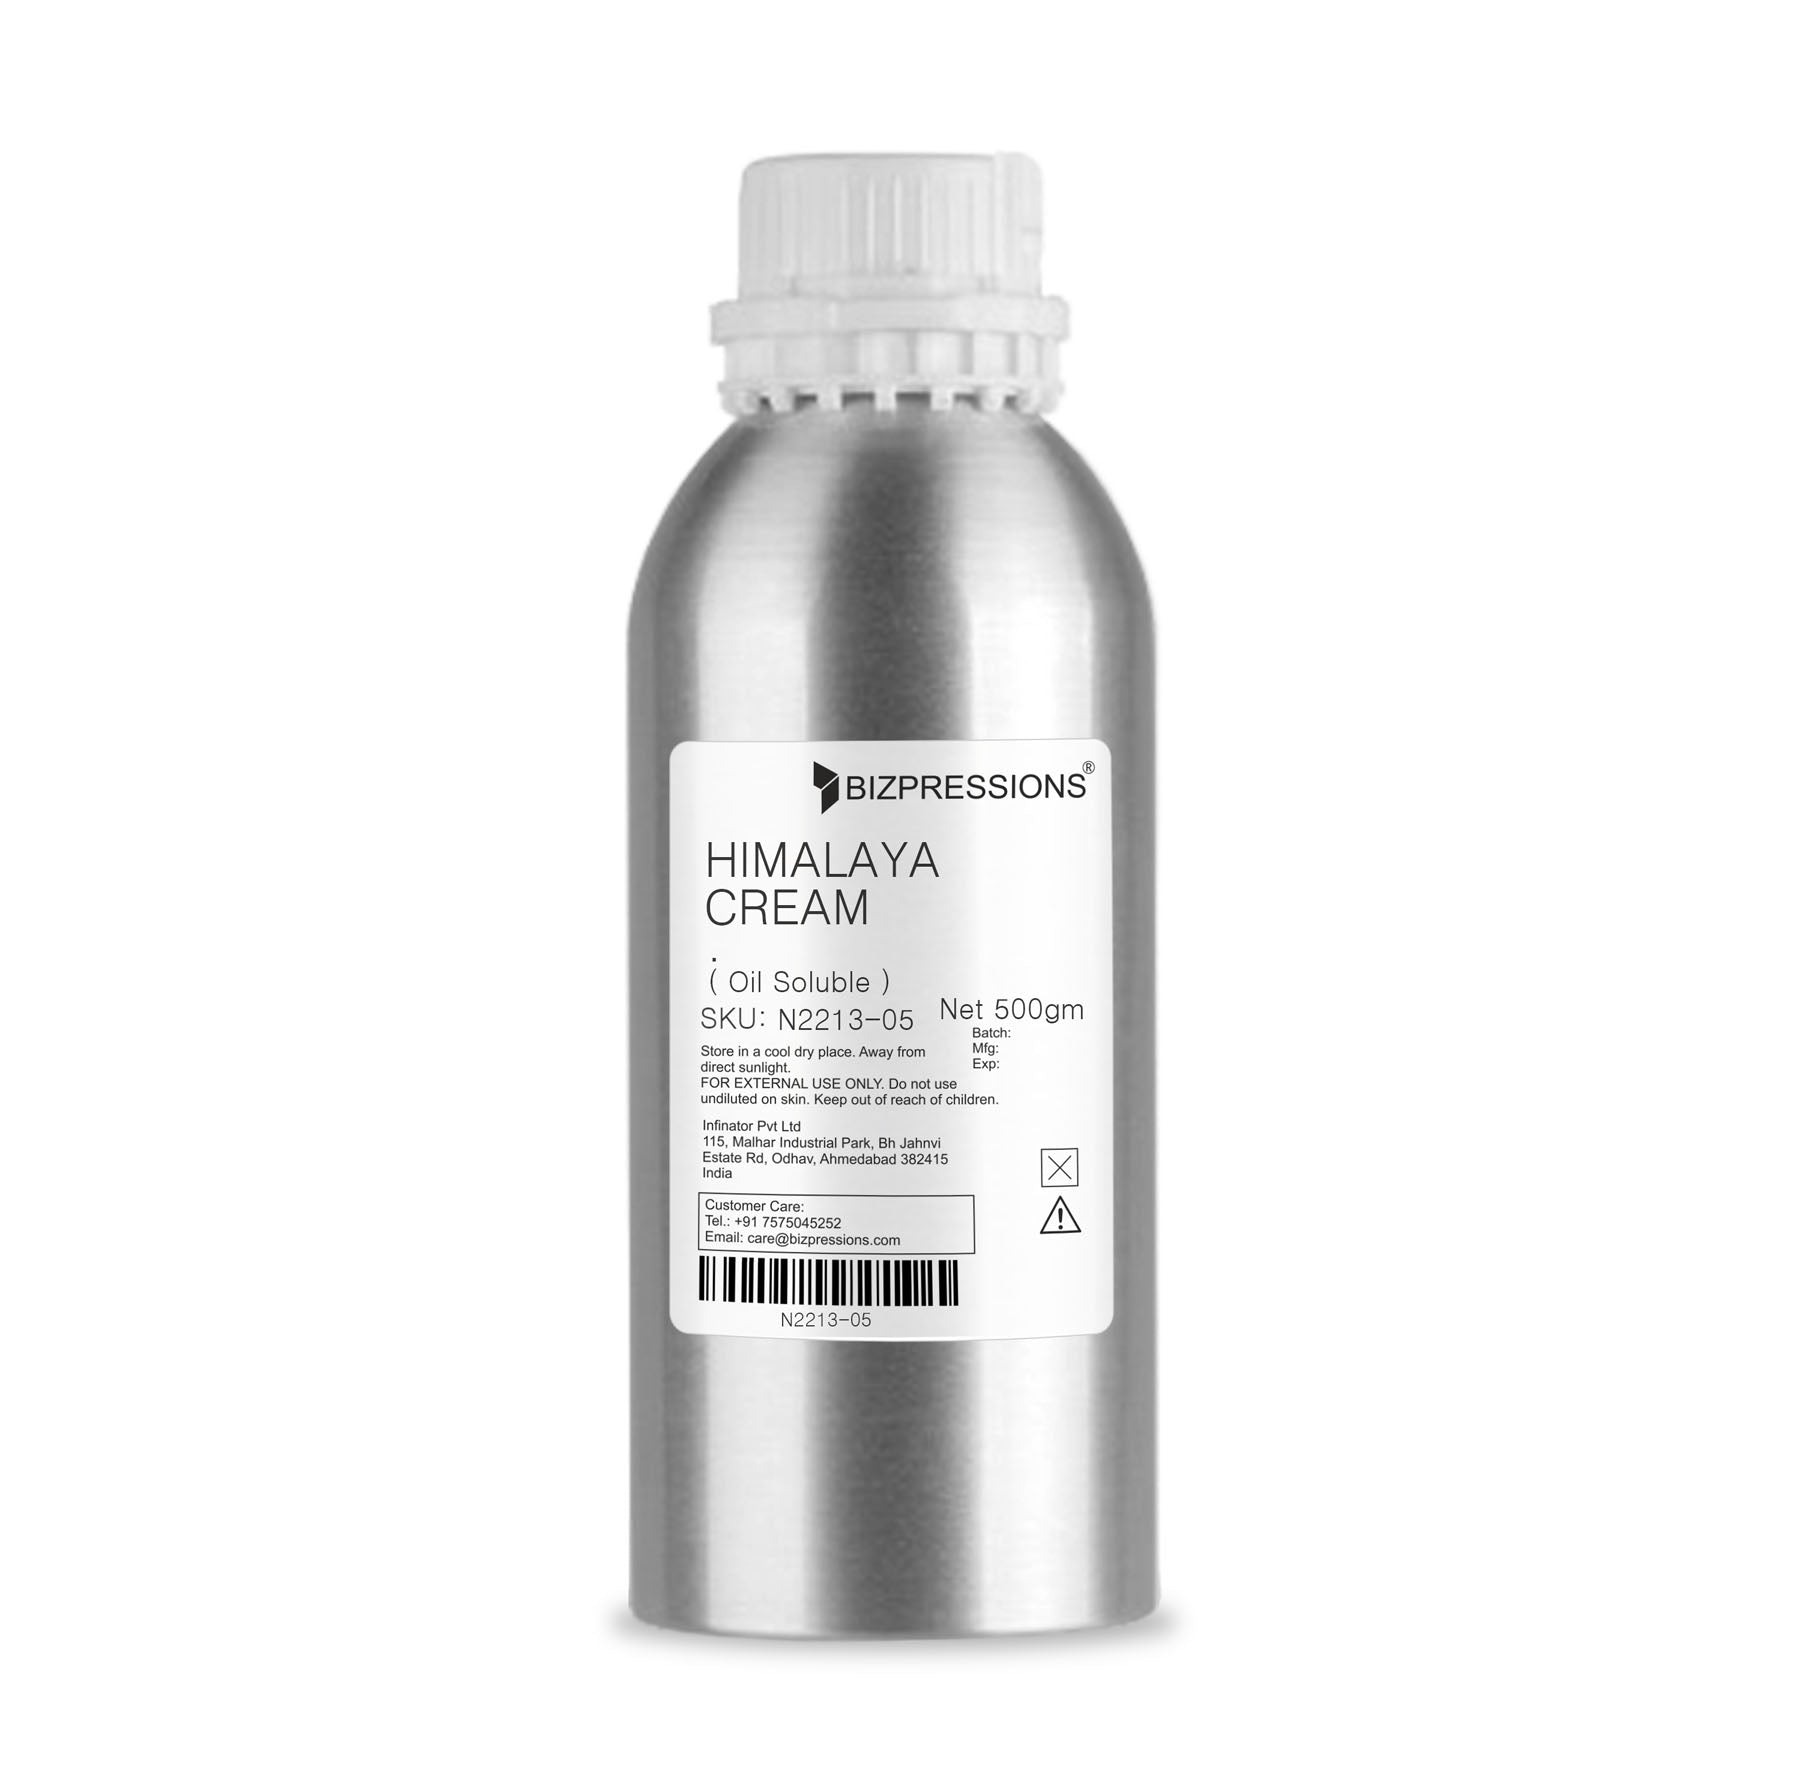 HIMALAYA CREAM - Fragrance ( Oil Soluble ) - 500 gm